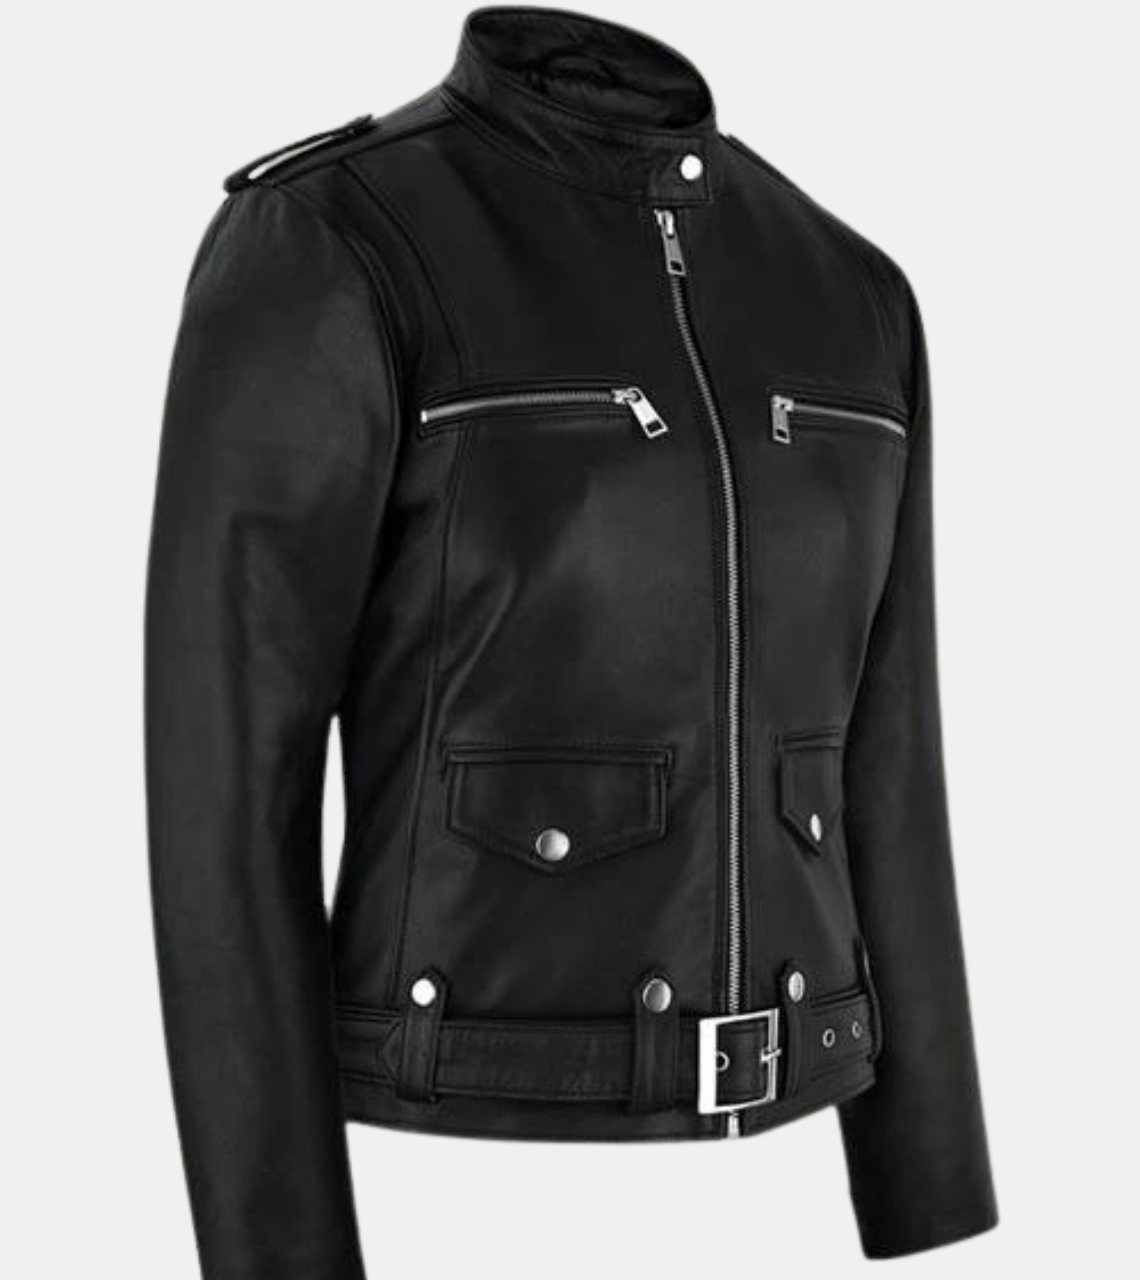  Women's Black Leather Jacket